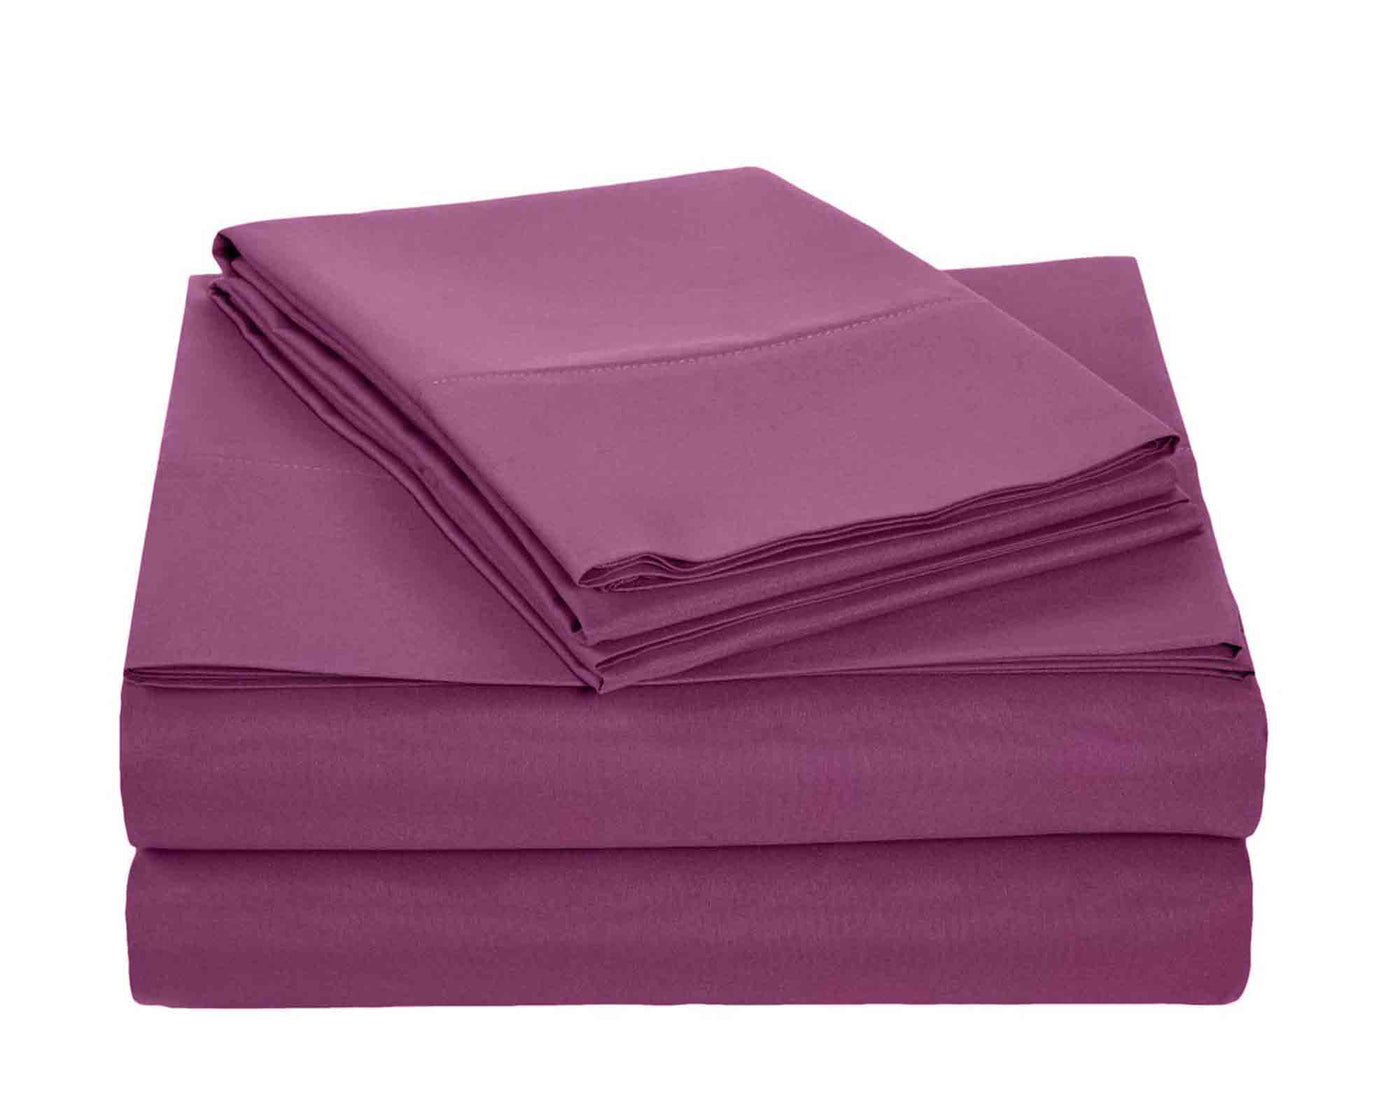 plum purple sheet set included 2 pillowcases 1 fitted sheet and 1 flat sheet#colour_plum-purple